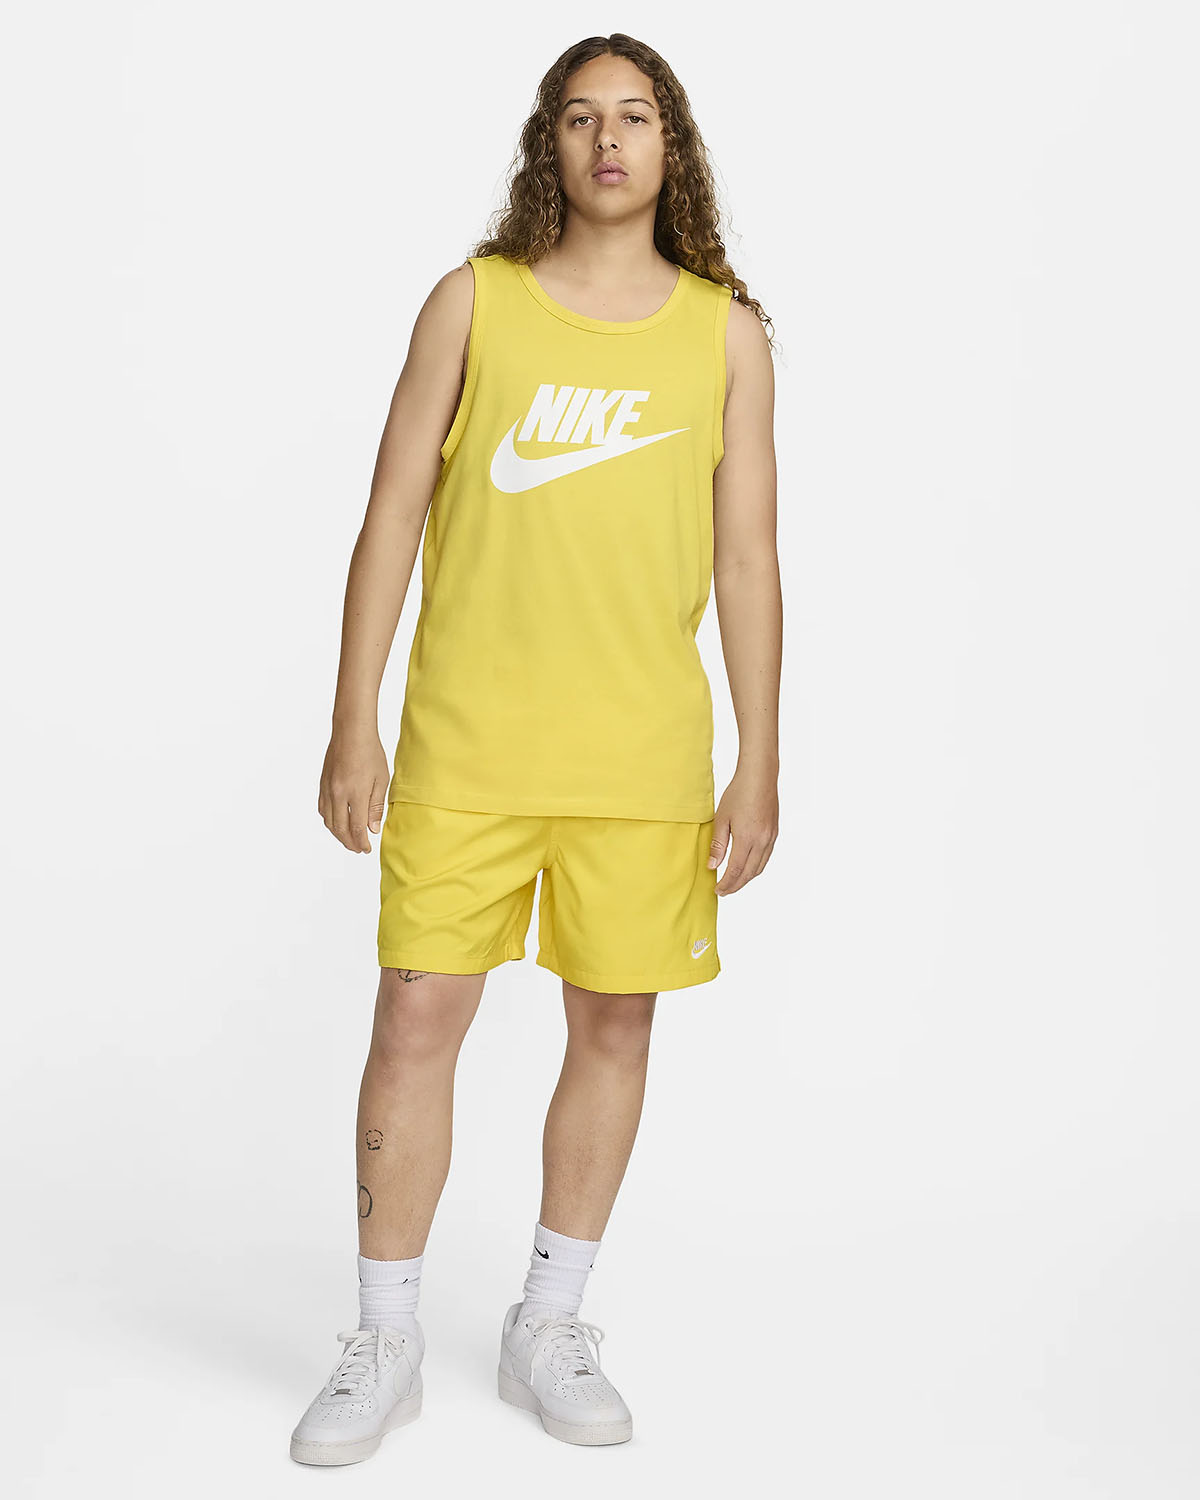 Nike Sportswear Tank Top Lightning Yellow